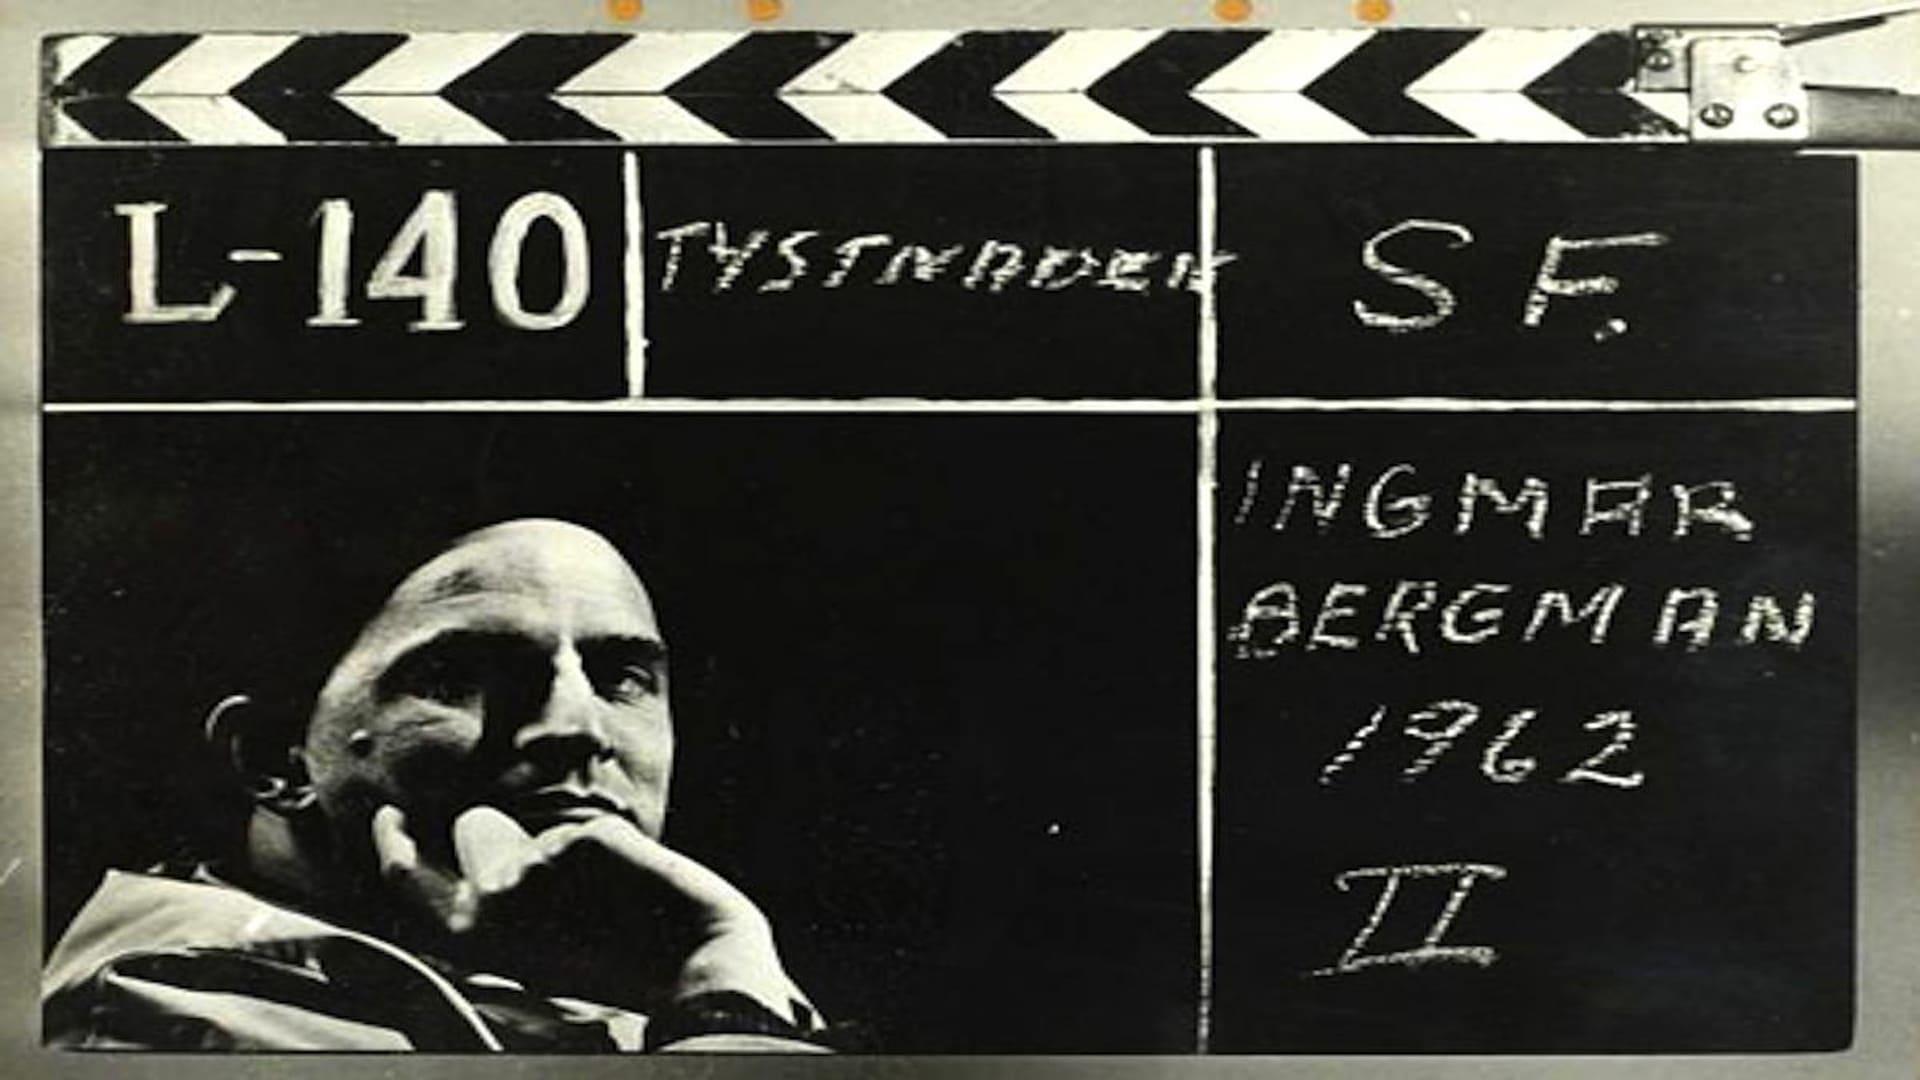 Ingmar Bergman on Life and Work backdrop